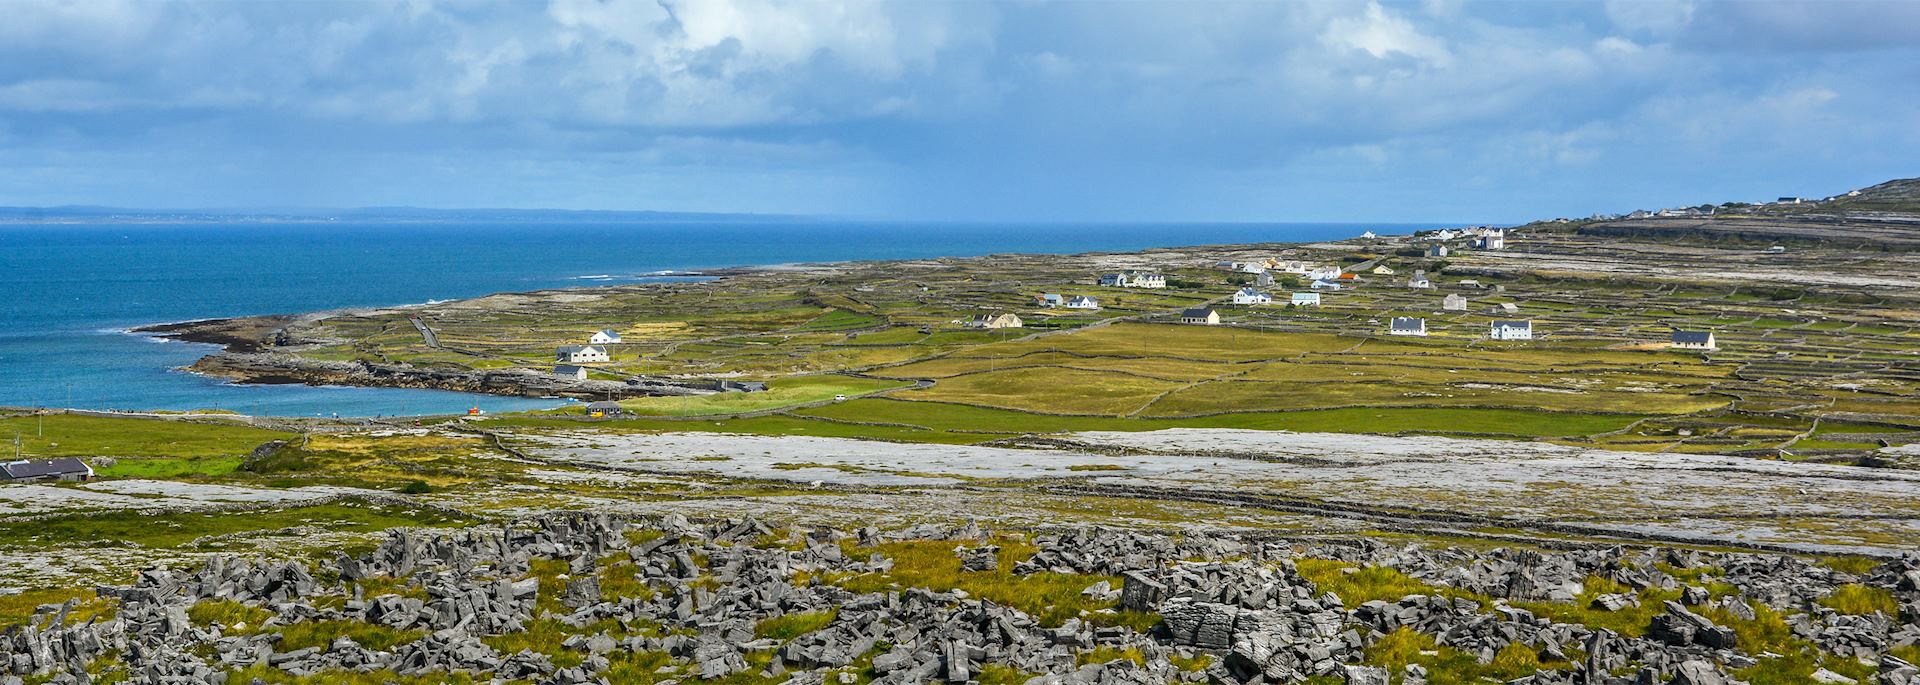 Inis Mór, Aran Islands